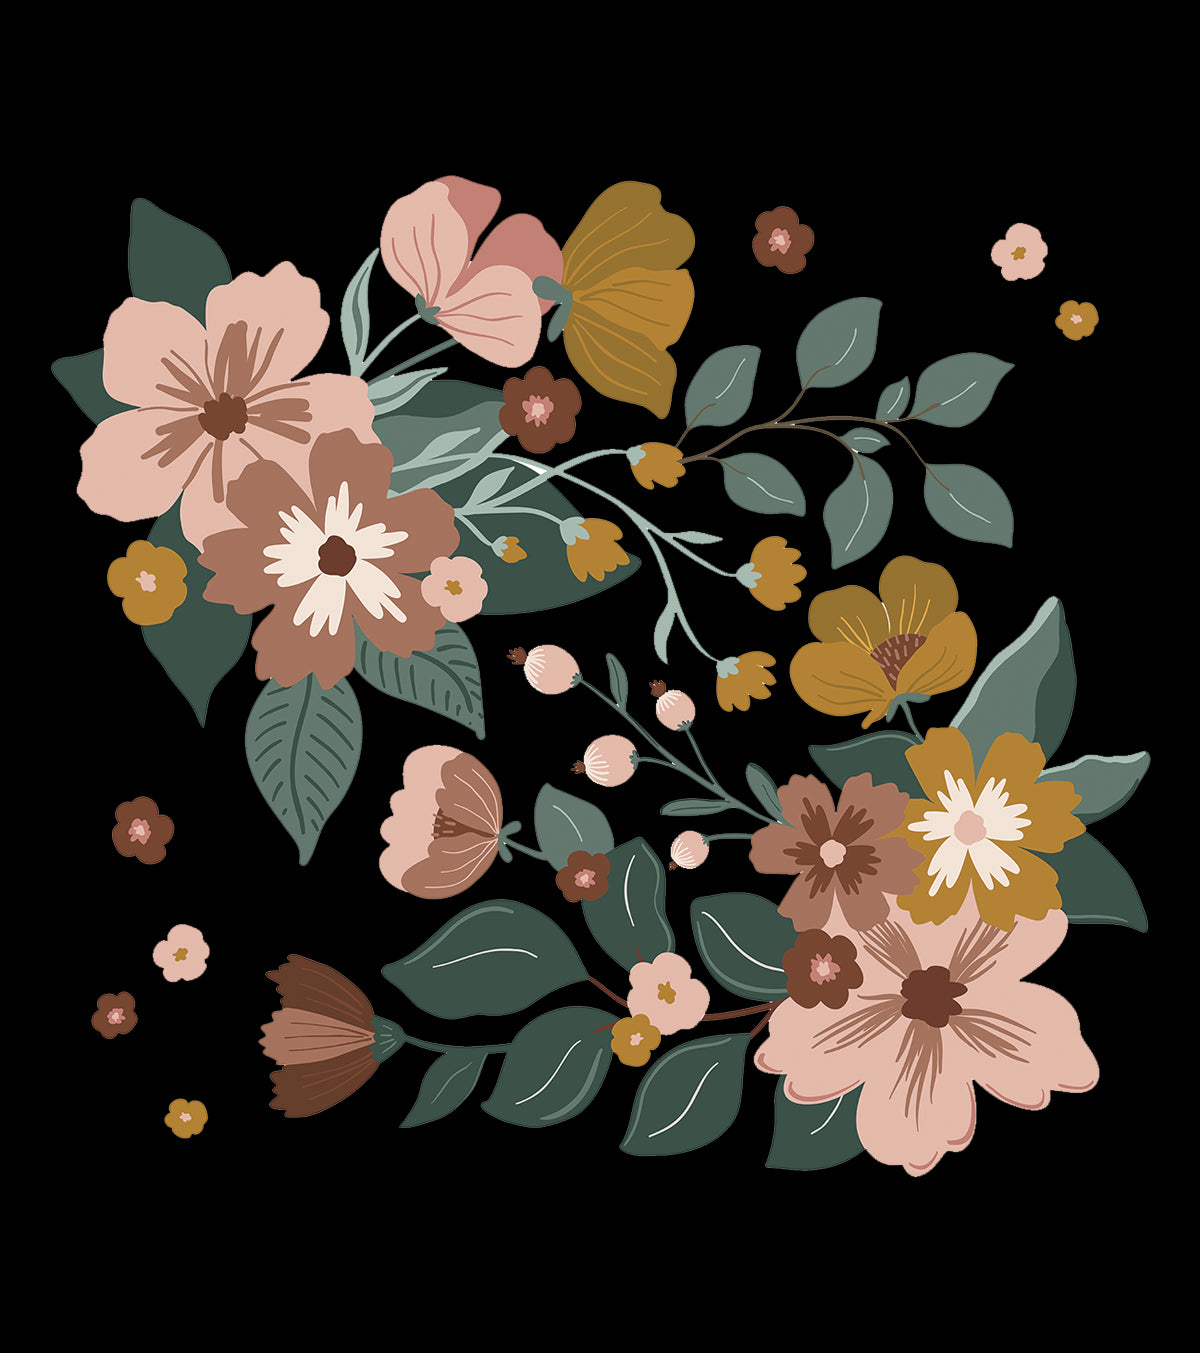 CAPUCINE - Stickers muraux - Les fleurs